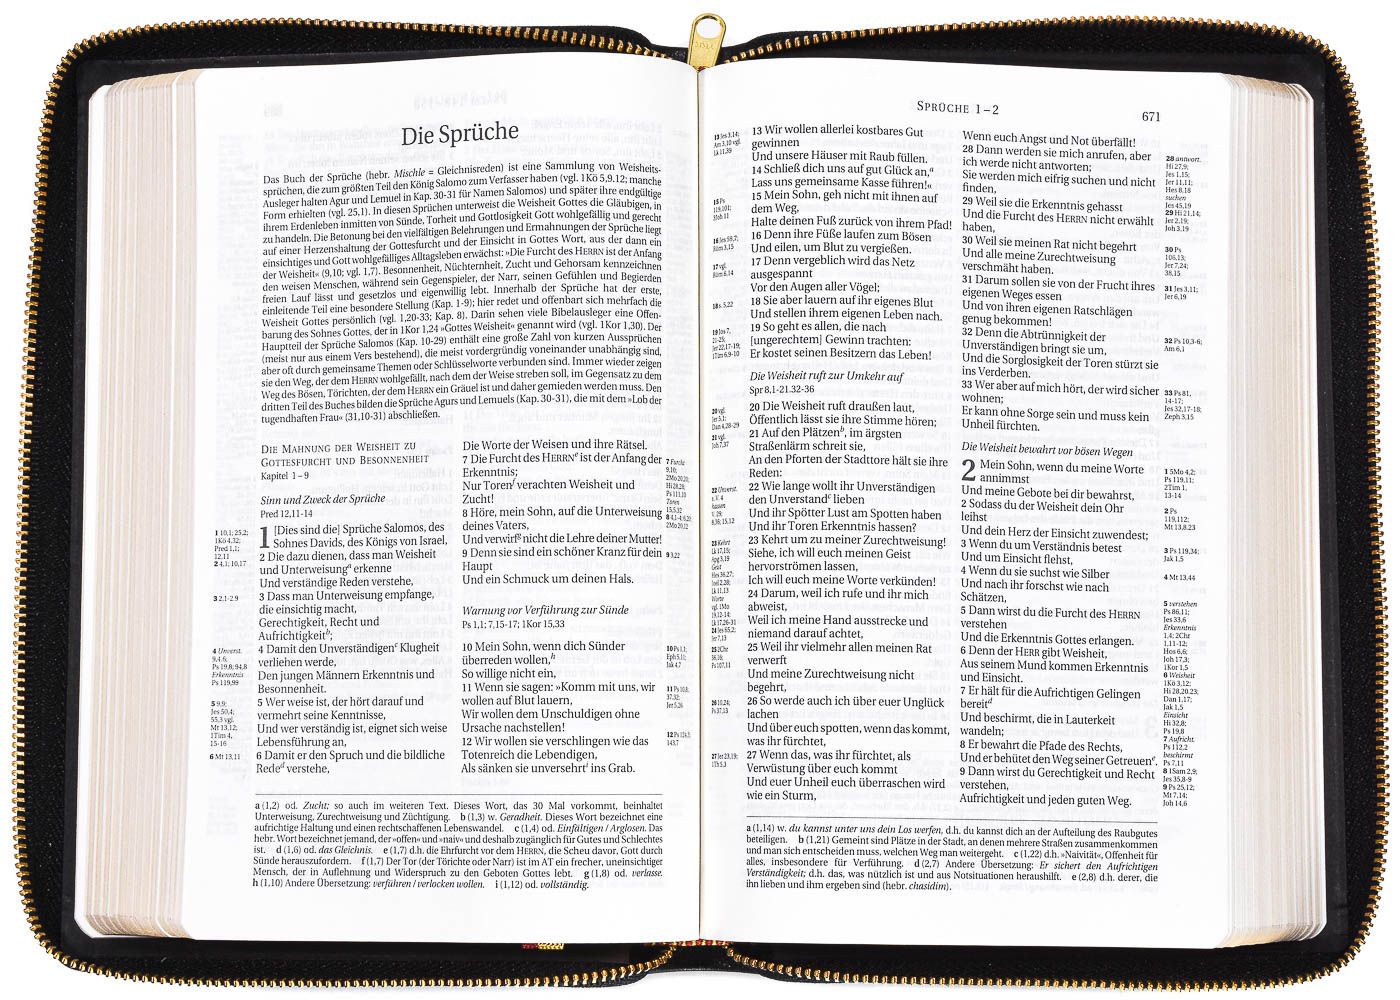 Schlachter 2000 Bibel - Taschenausgabe, Softcover, Goldschnitt, Reißverschluss, Kalbsleder